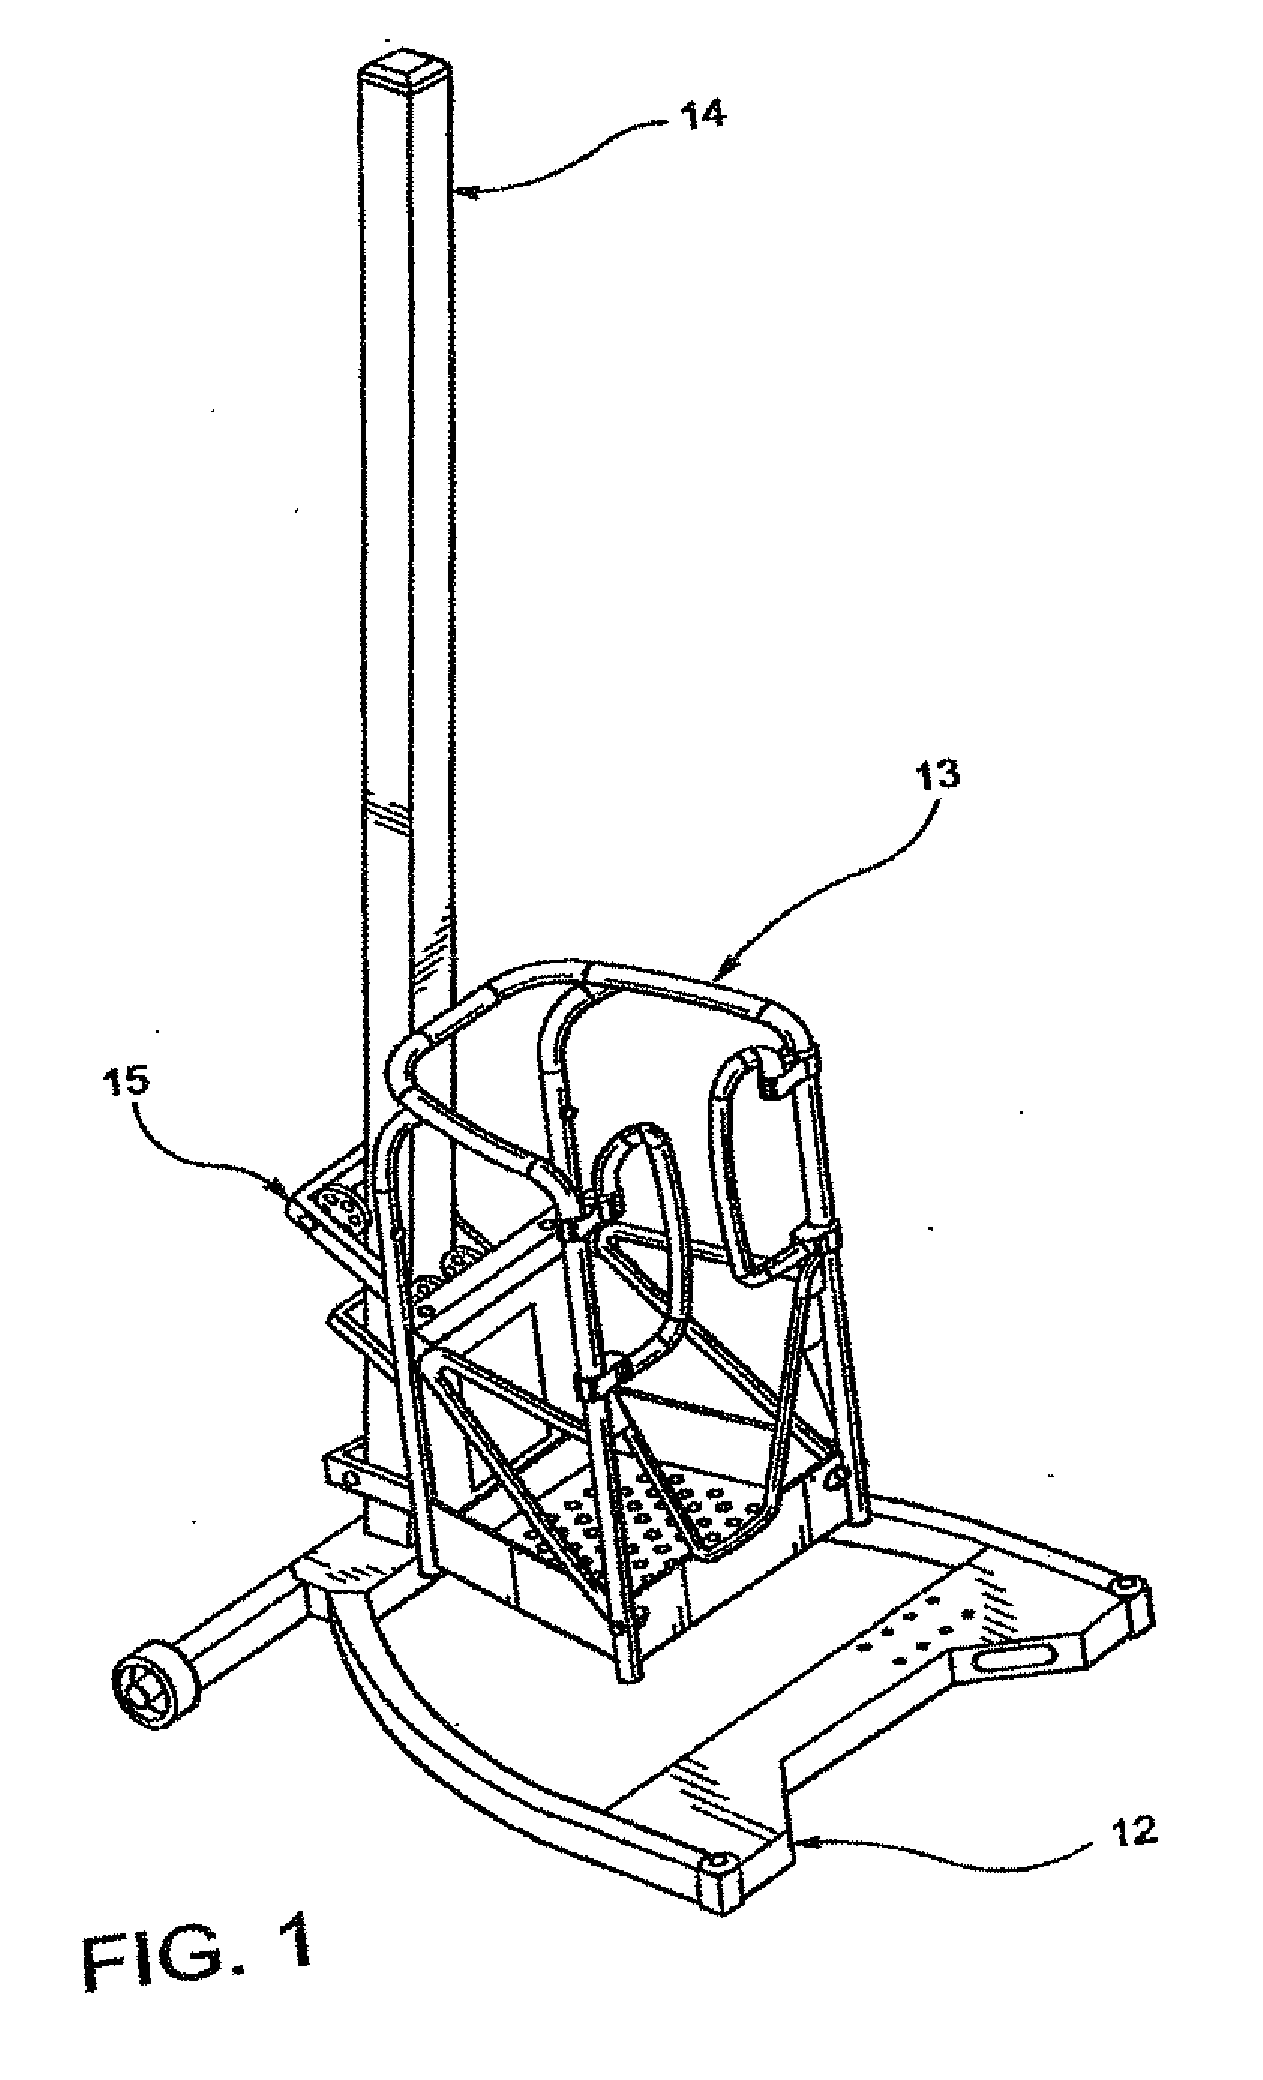 Mast Lift and Mast Lift System